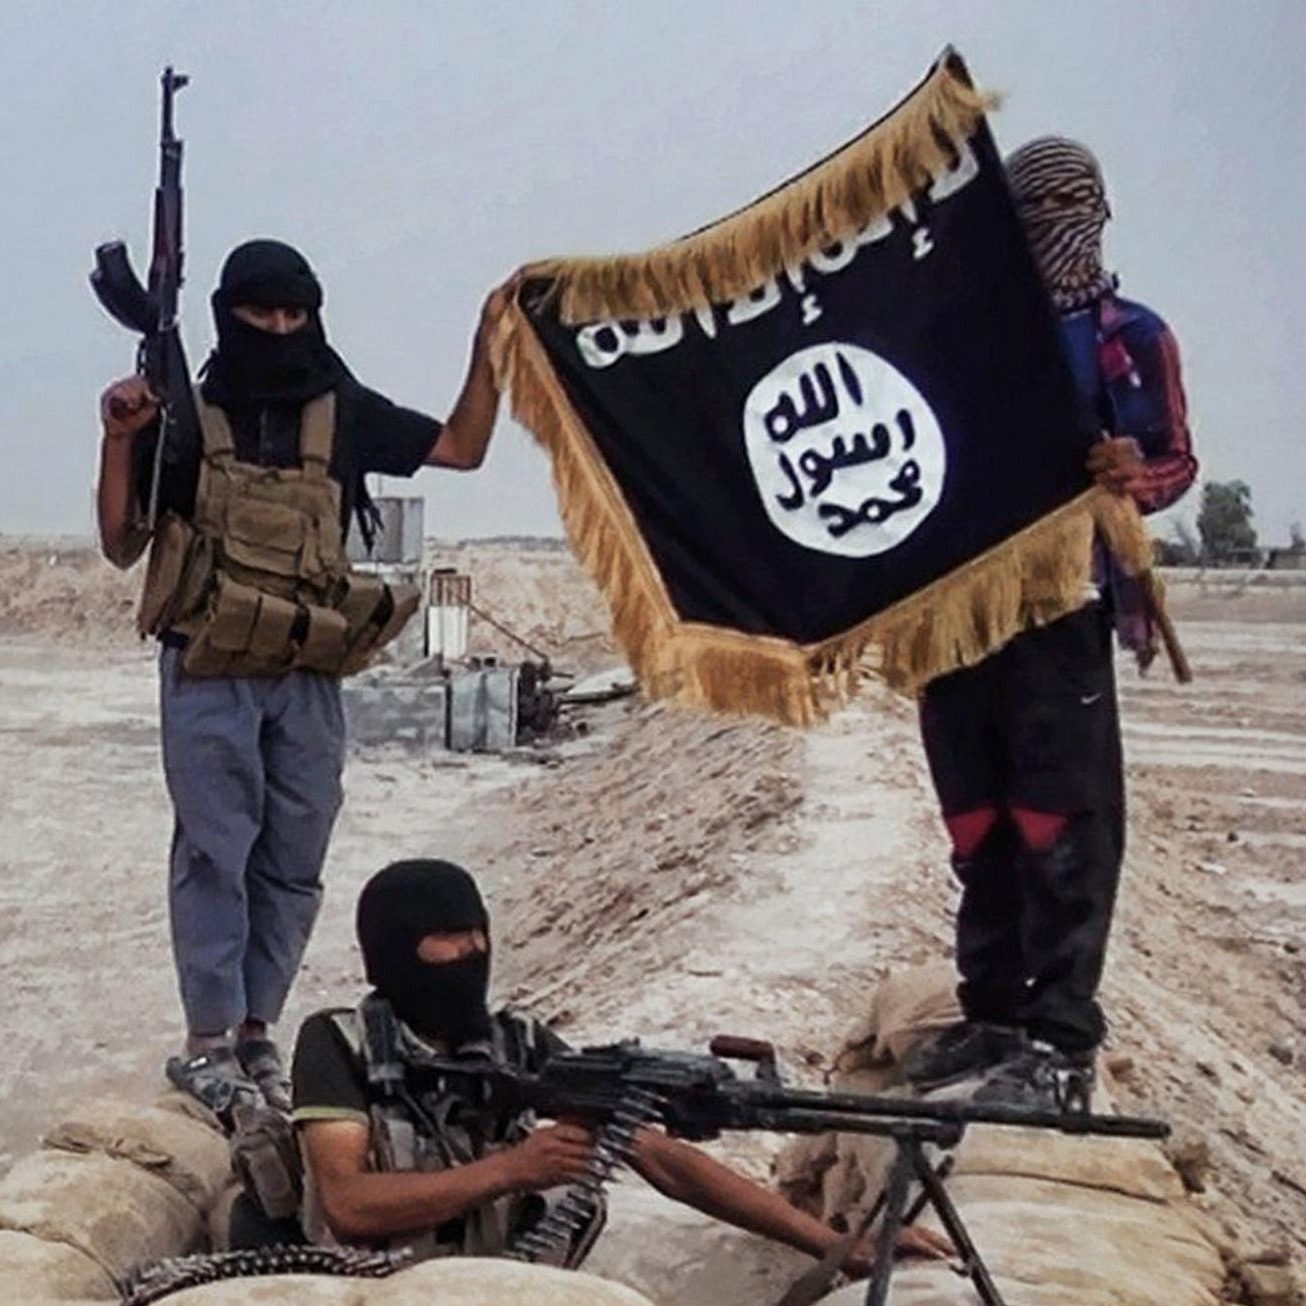 ISIS terrorists waving their flag.